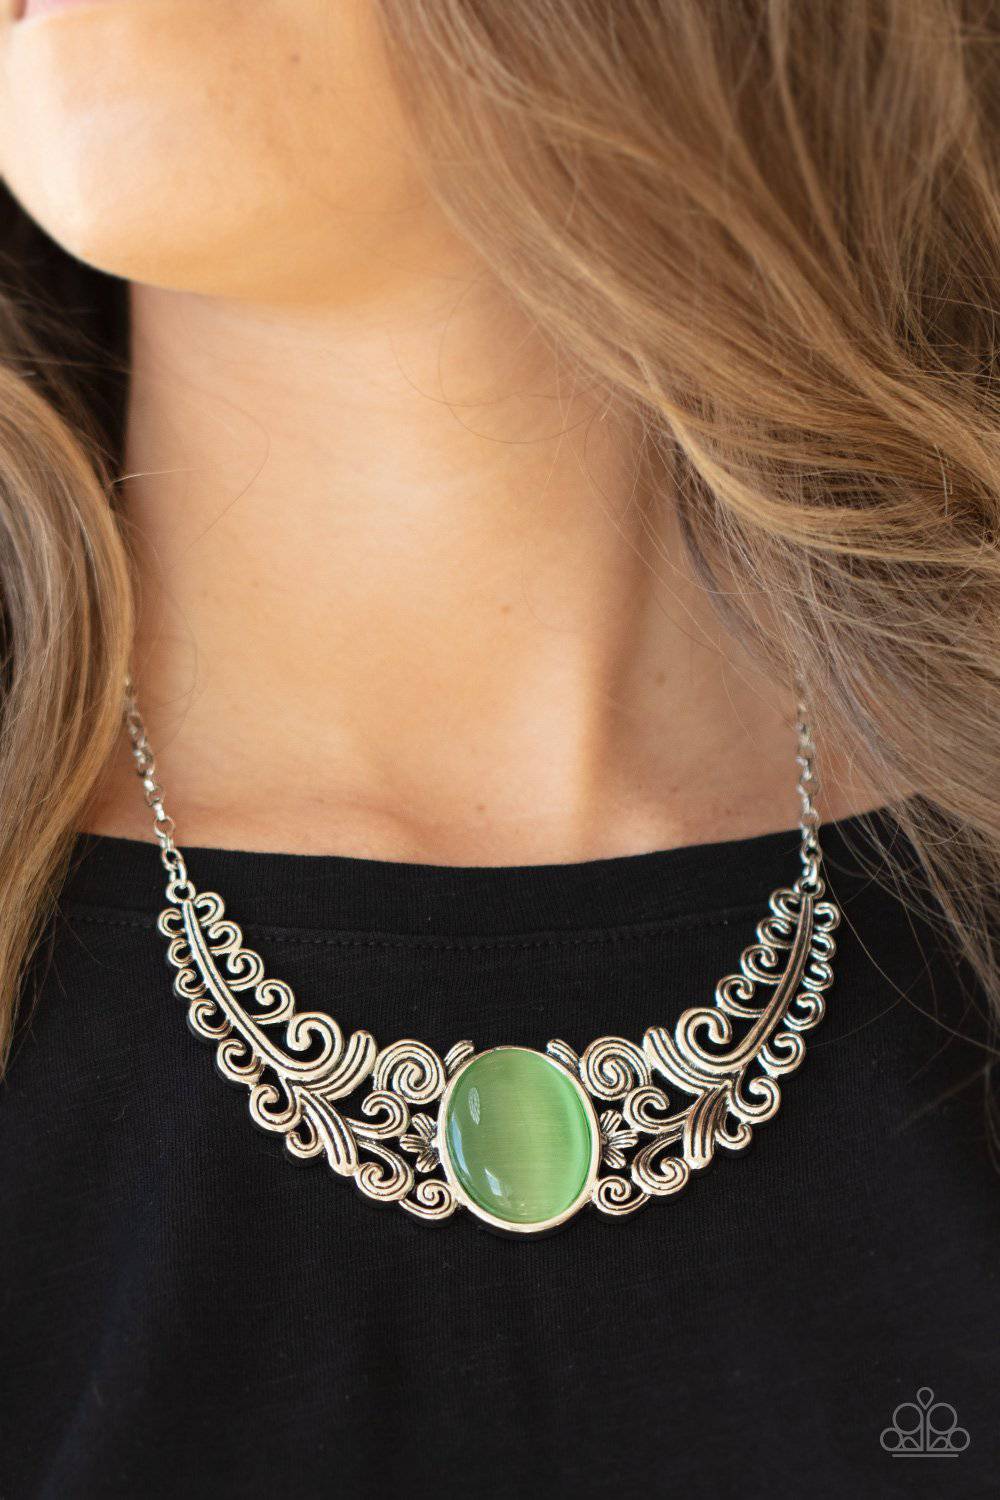 Celestial Eden - Green Cat's Eye Necklace - Paparazzi Accessories - GlaMarous Titi Jewels